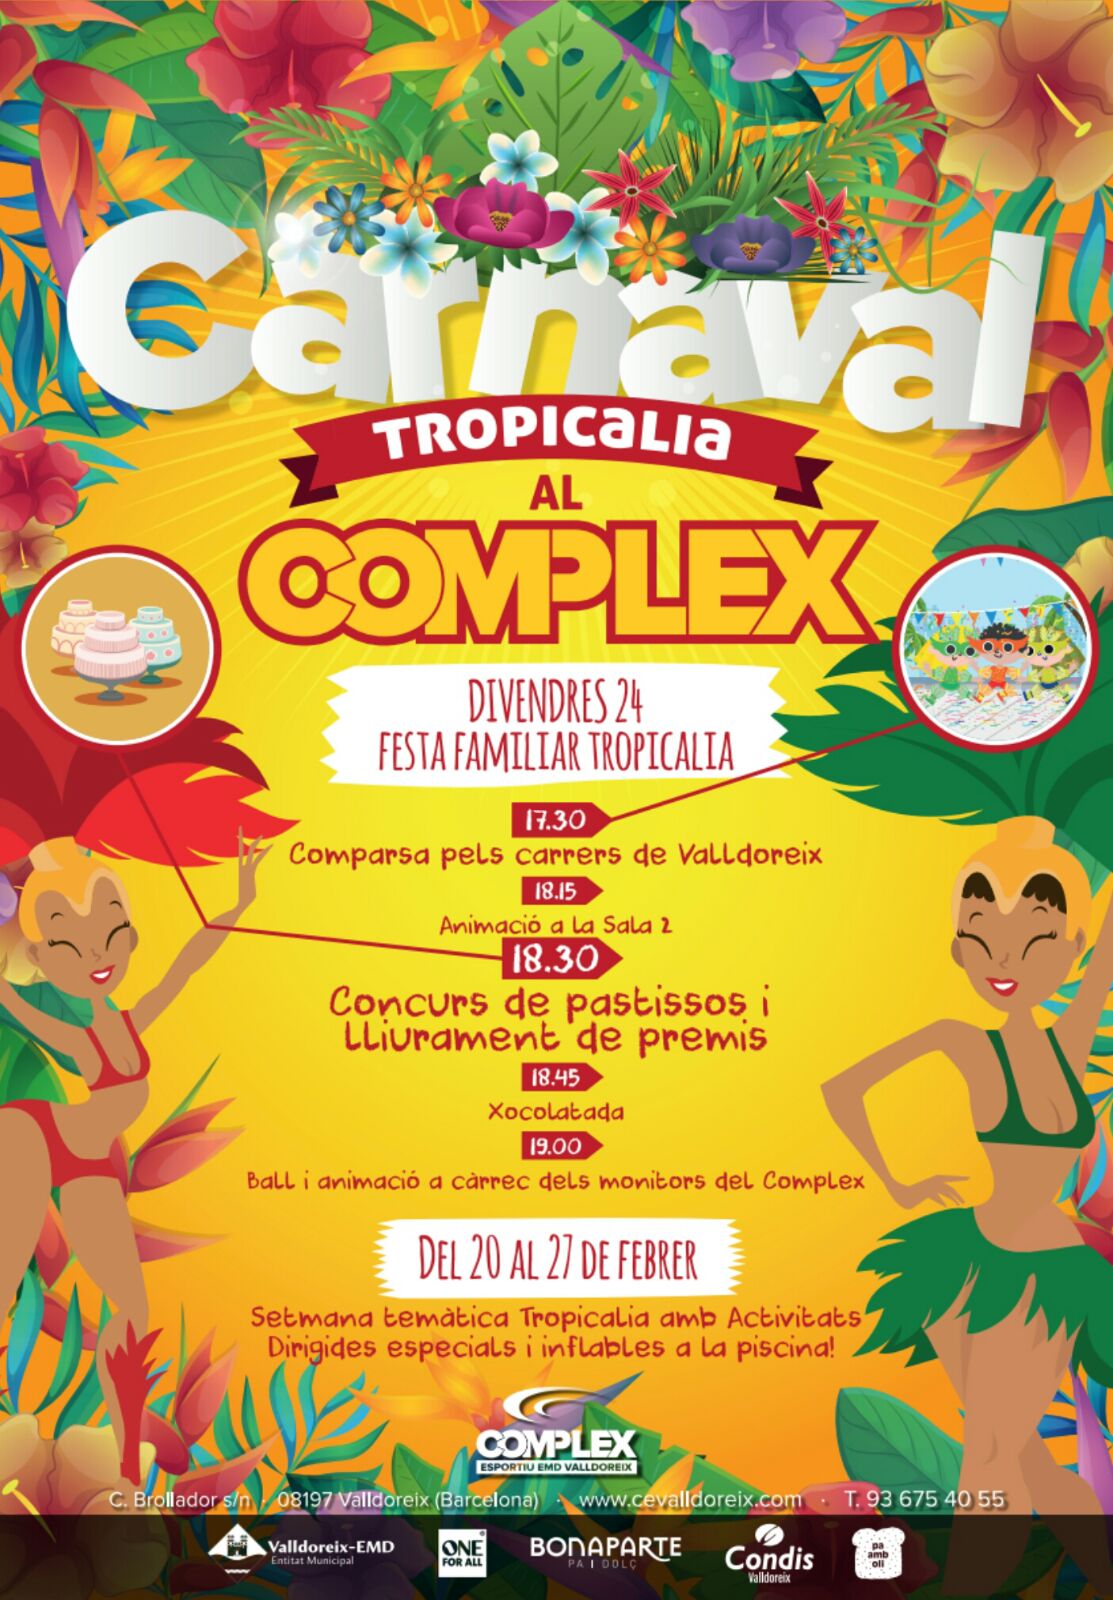 Carnaval “Tropicalia” al Complex!